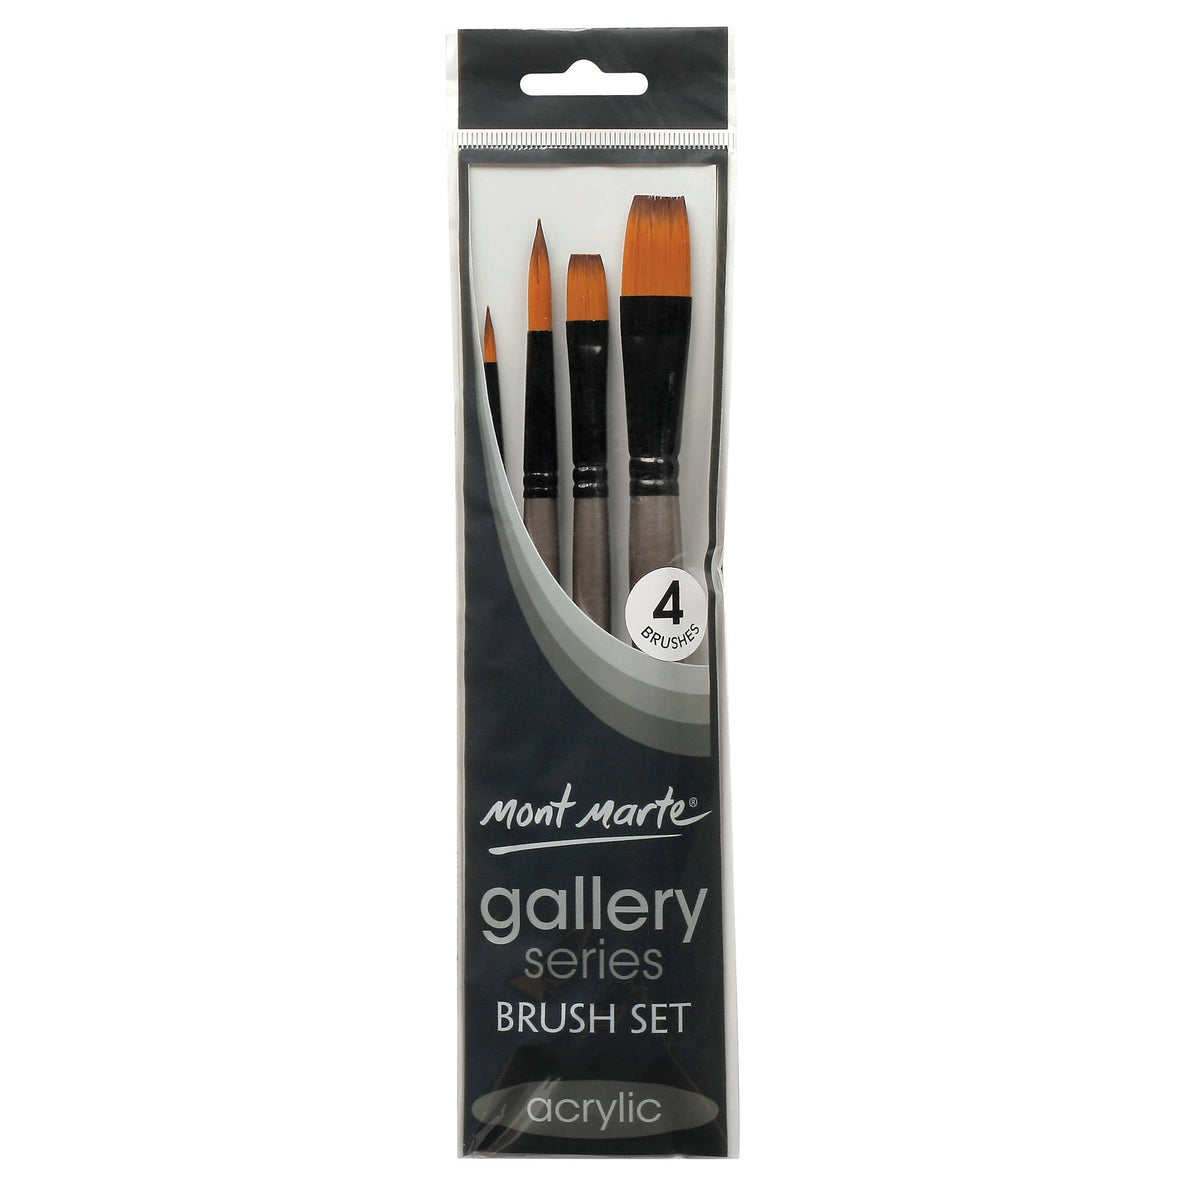 Gallery Series Brush Set Acrylic 4pc